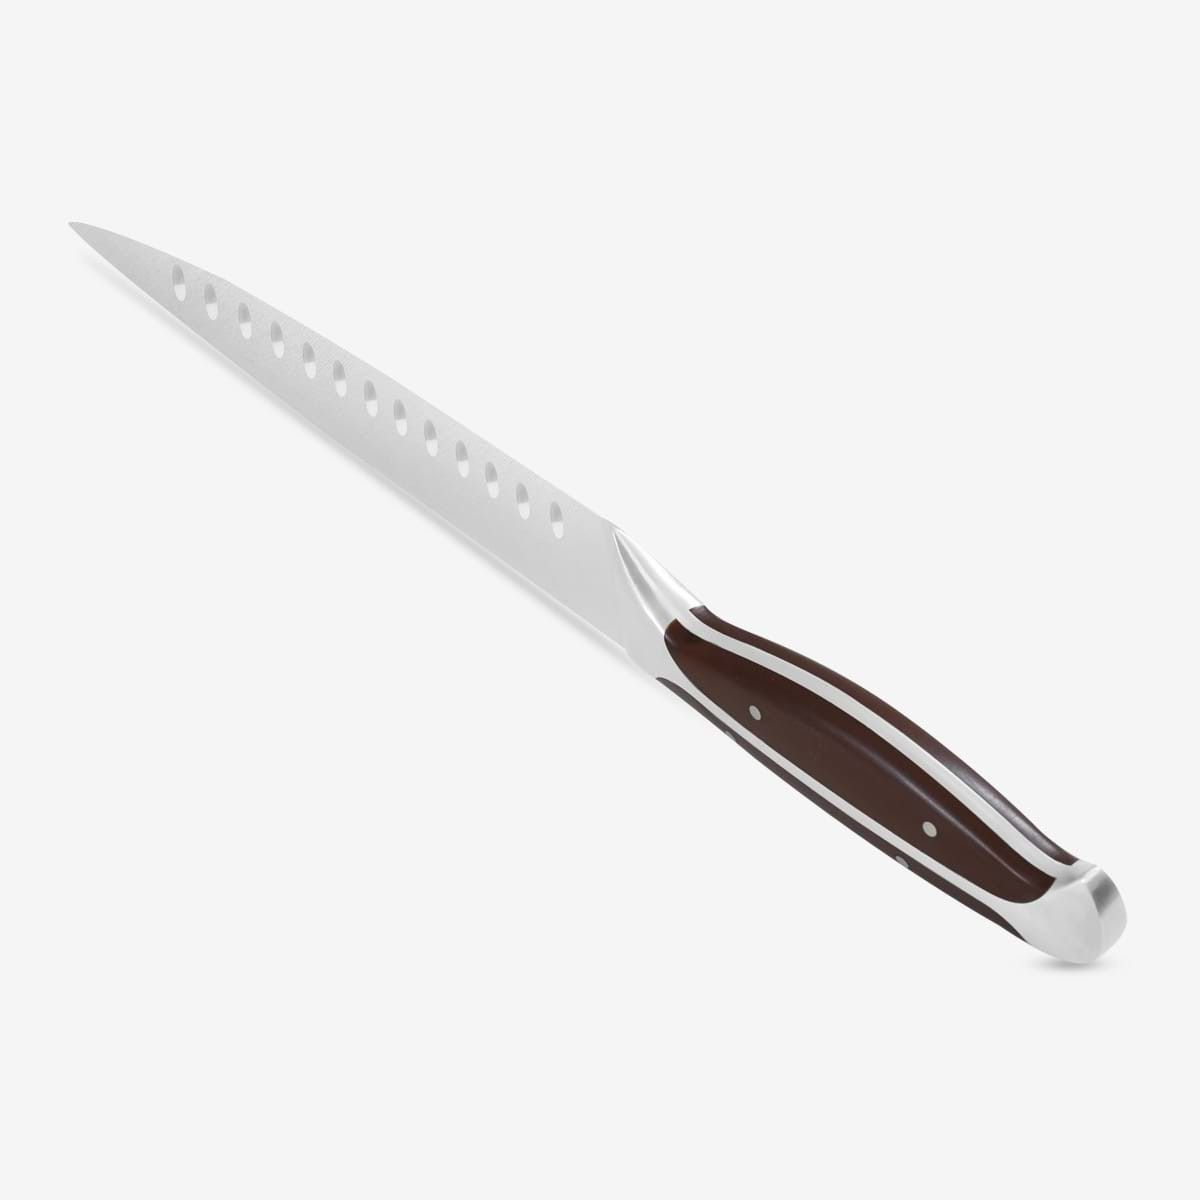 Gunter Wilhelm Thunder Carving Knife, 10 Inch | Dark Brown ABS Handle SKU: 30-321-0210